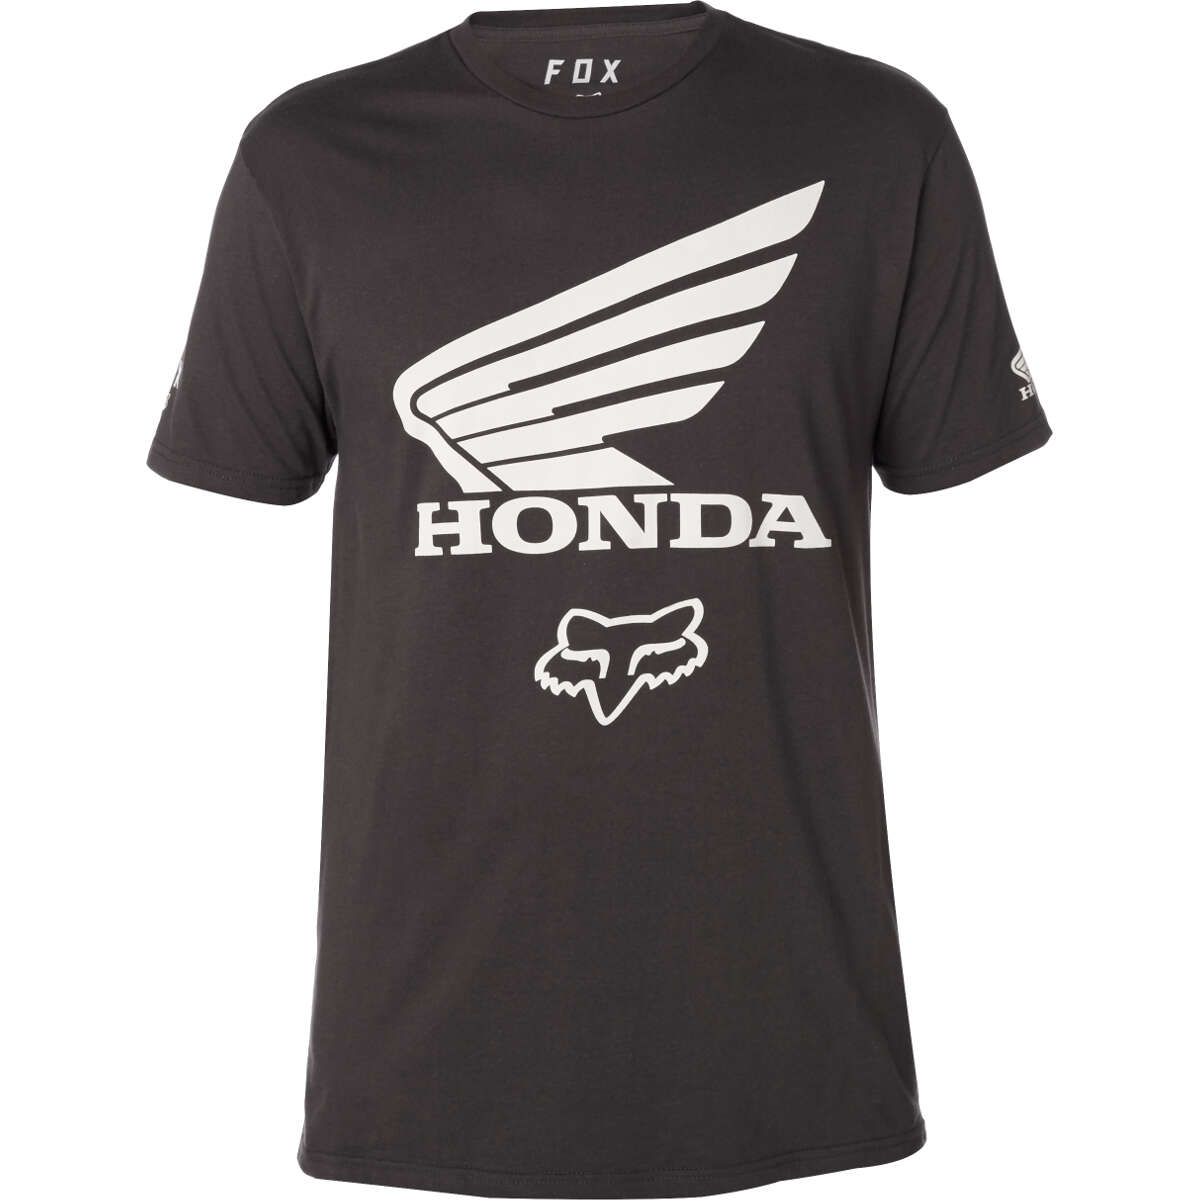 Fox T-Shirt Honda Premium Black Vintage